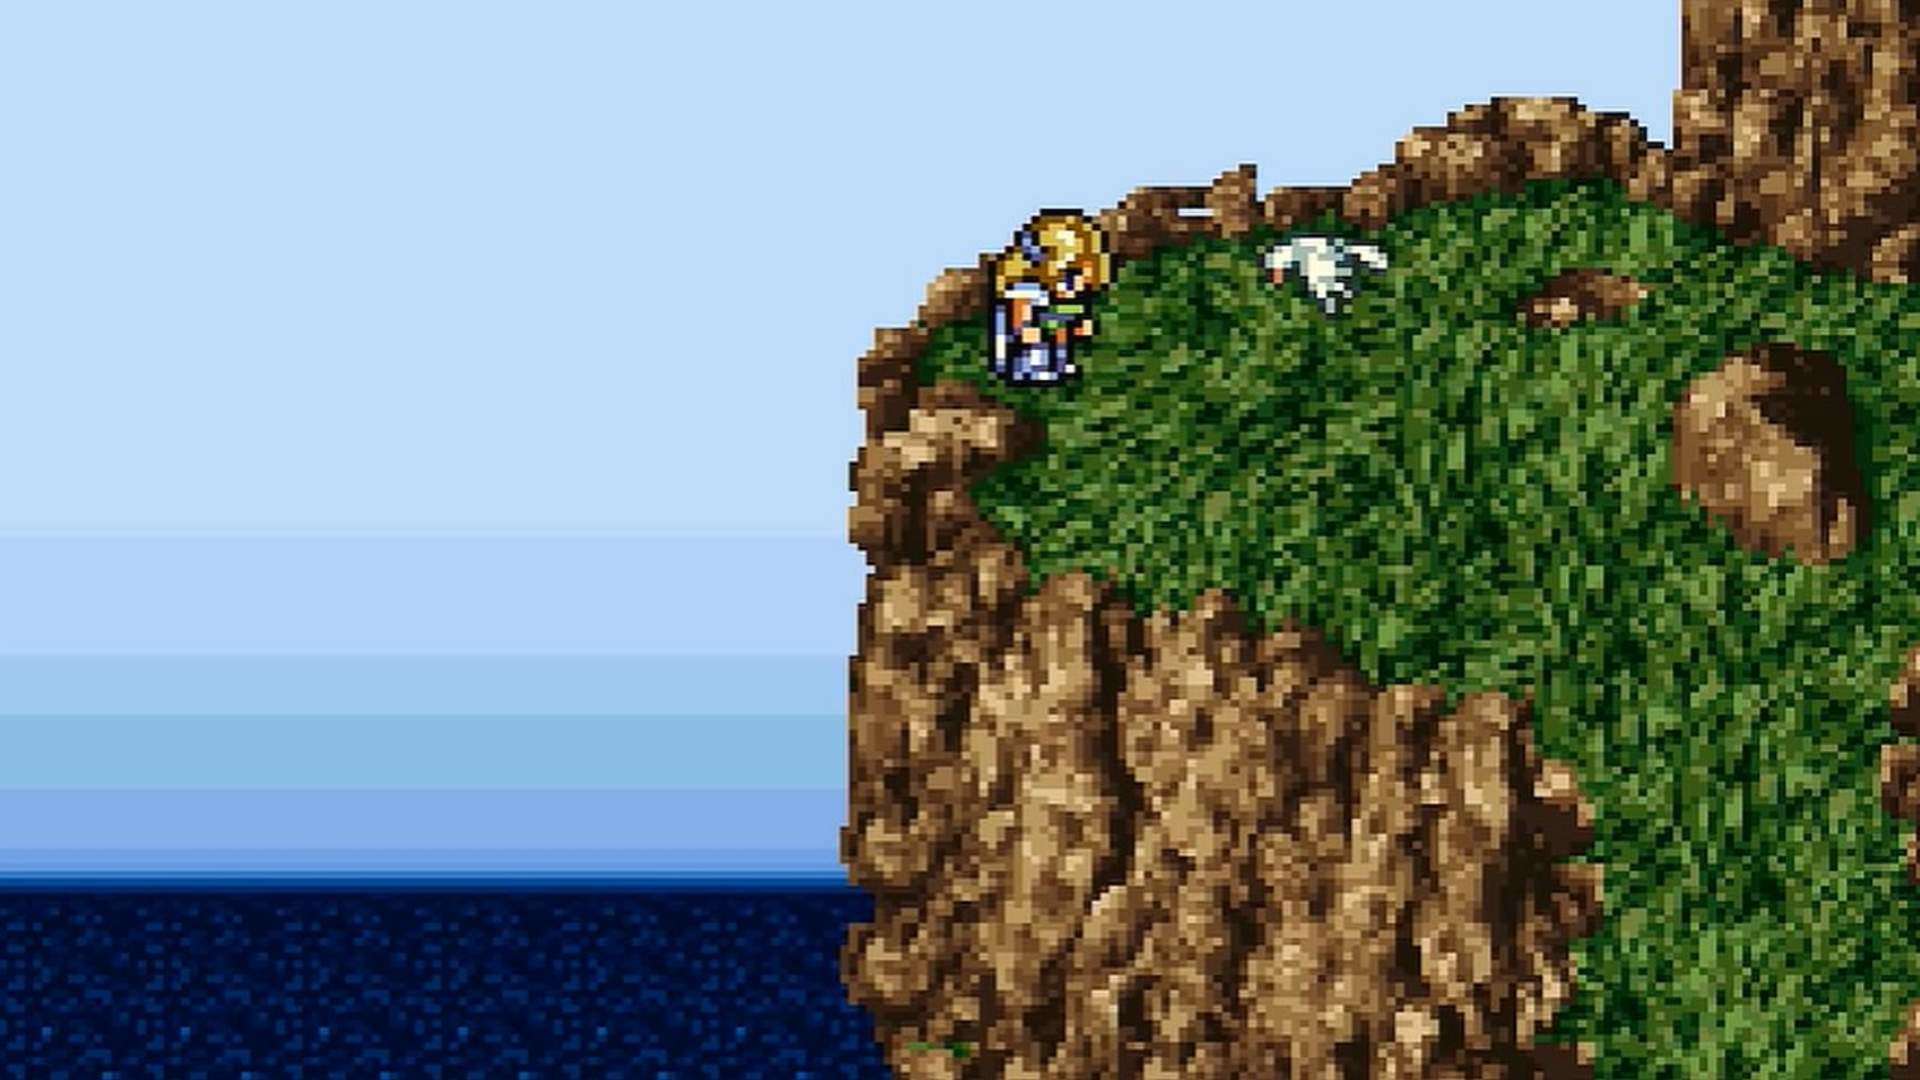 Final Fantasy VI has a literal, earth-shattering plot twist